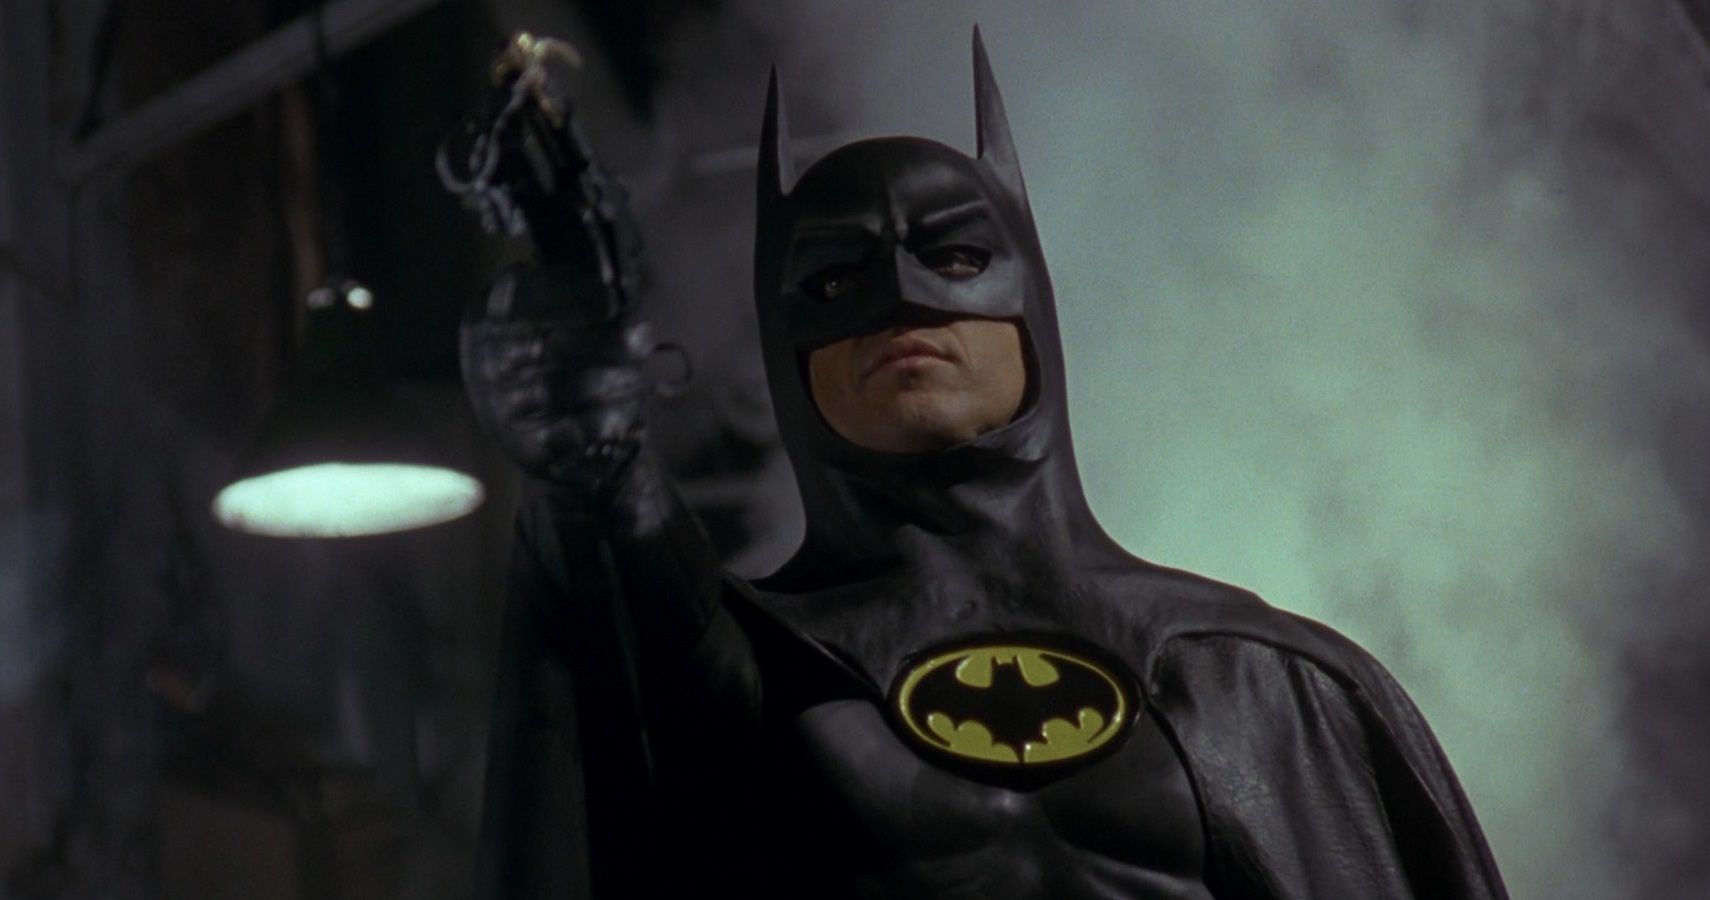 Michael Keaton in Batman aiming his gun.